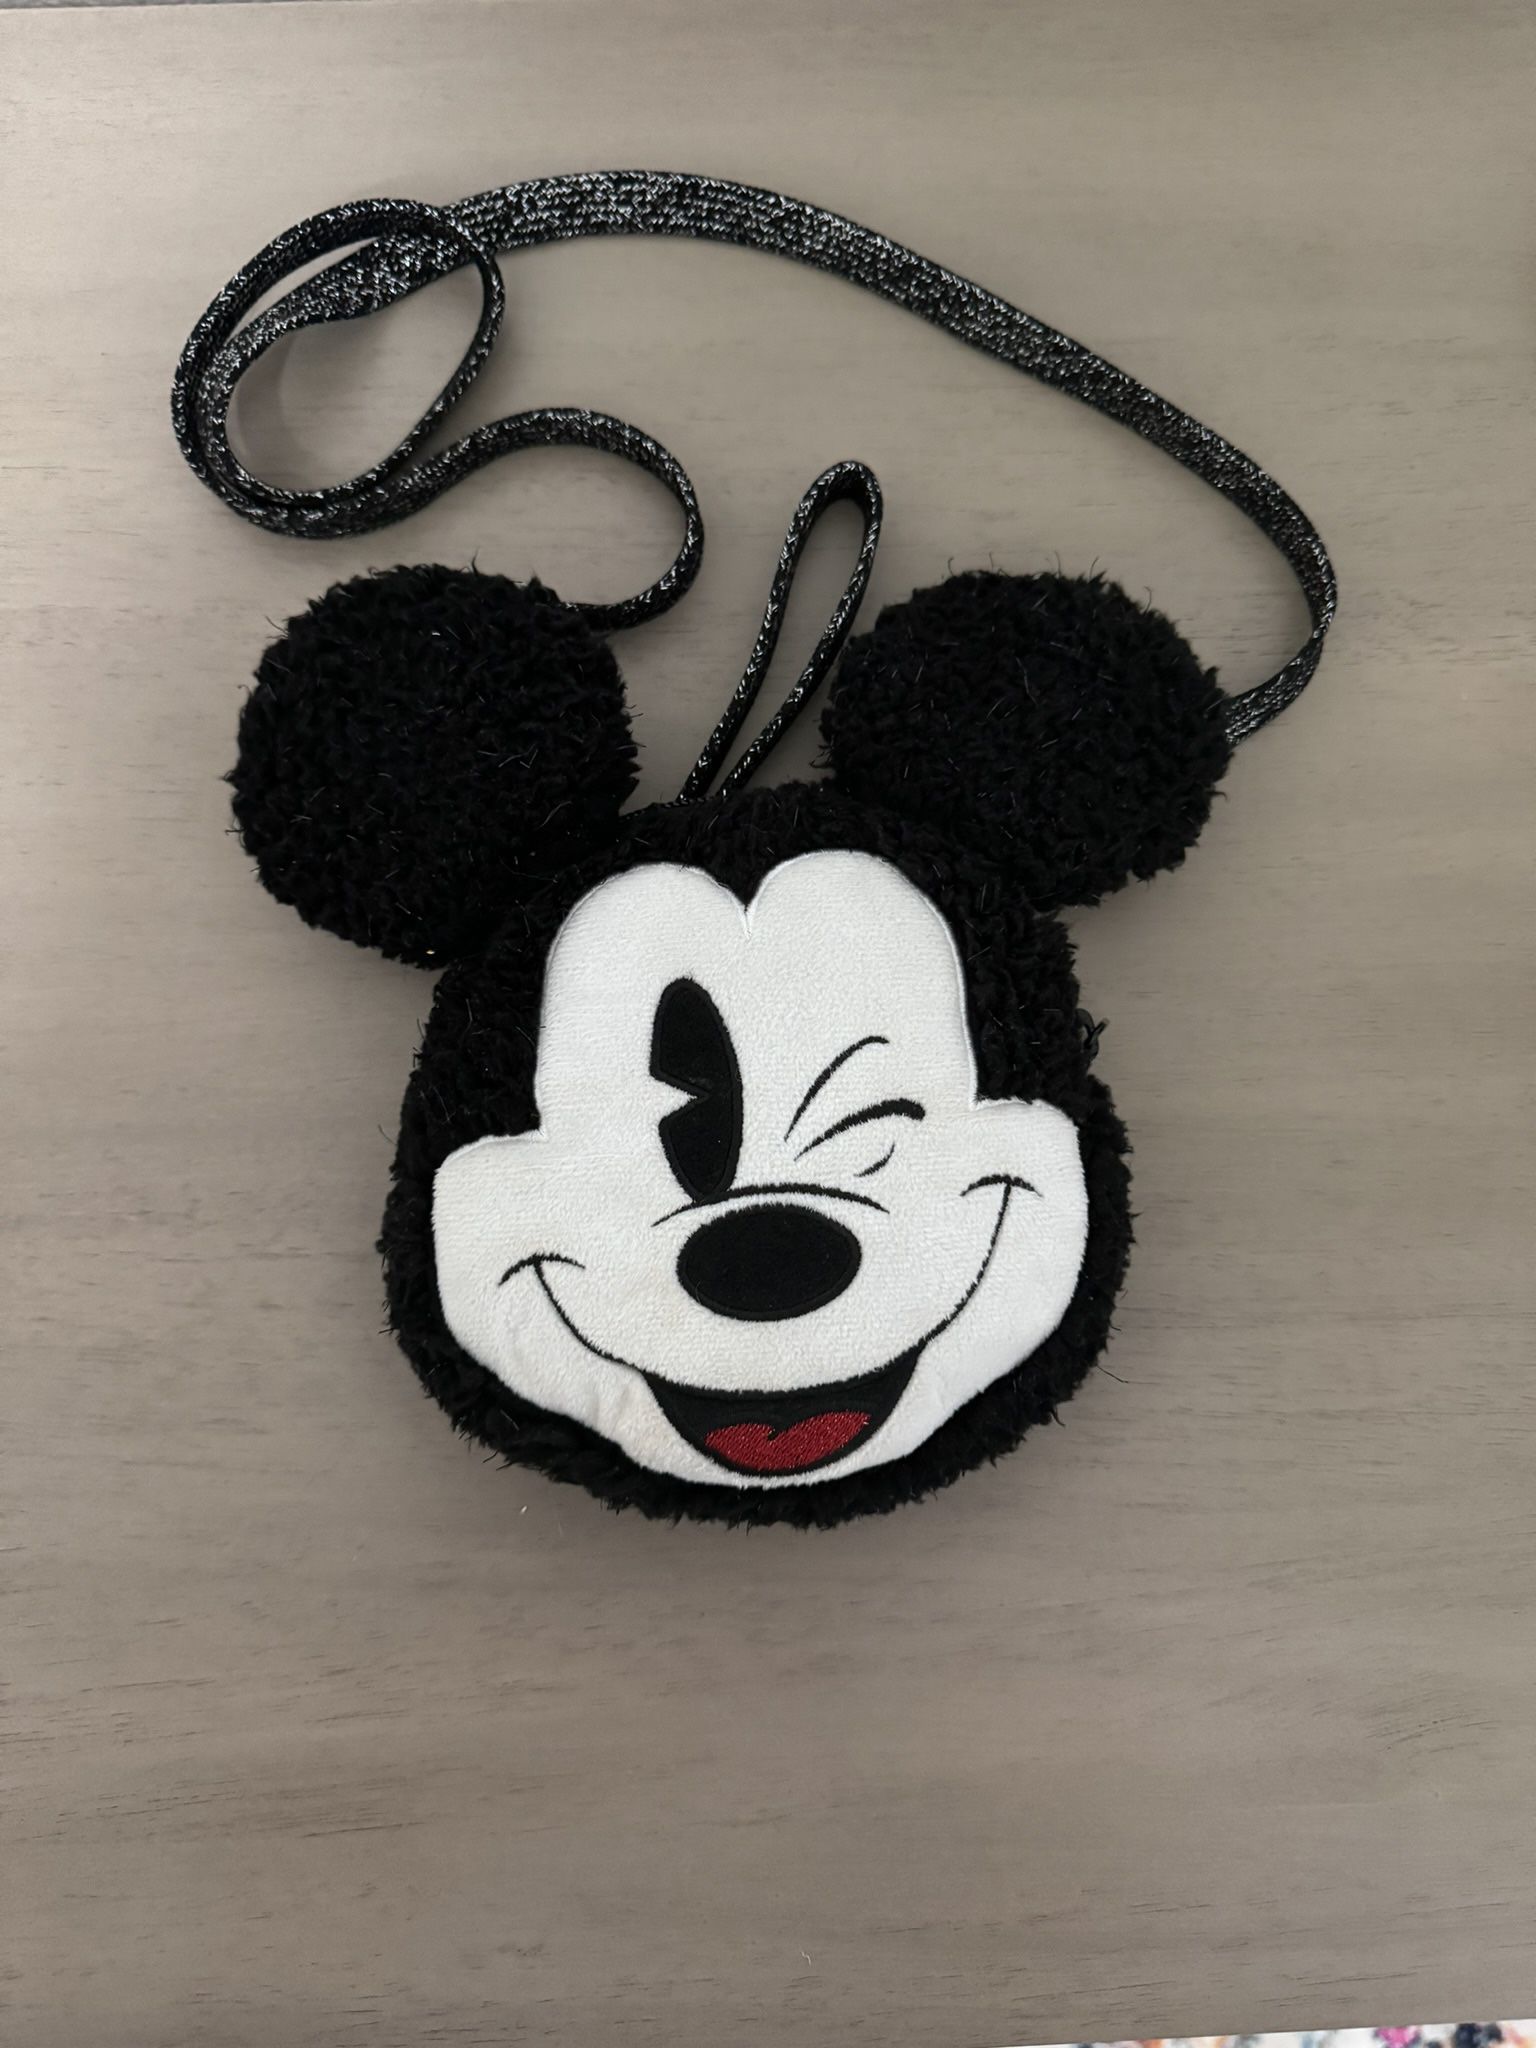 Mickey Mouse Crossbody Bag